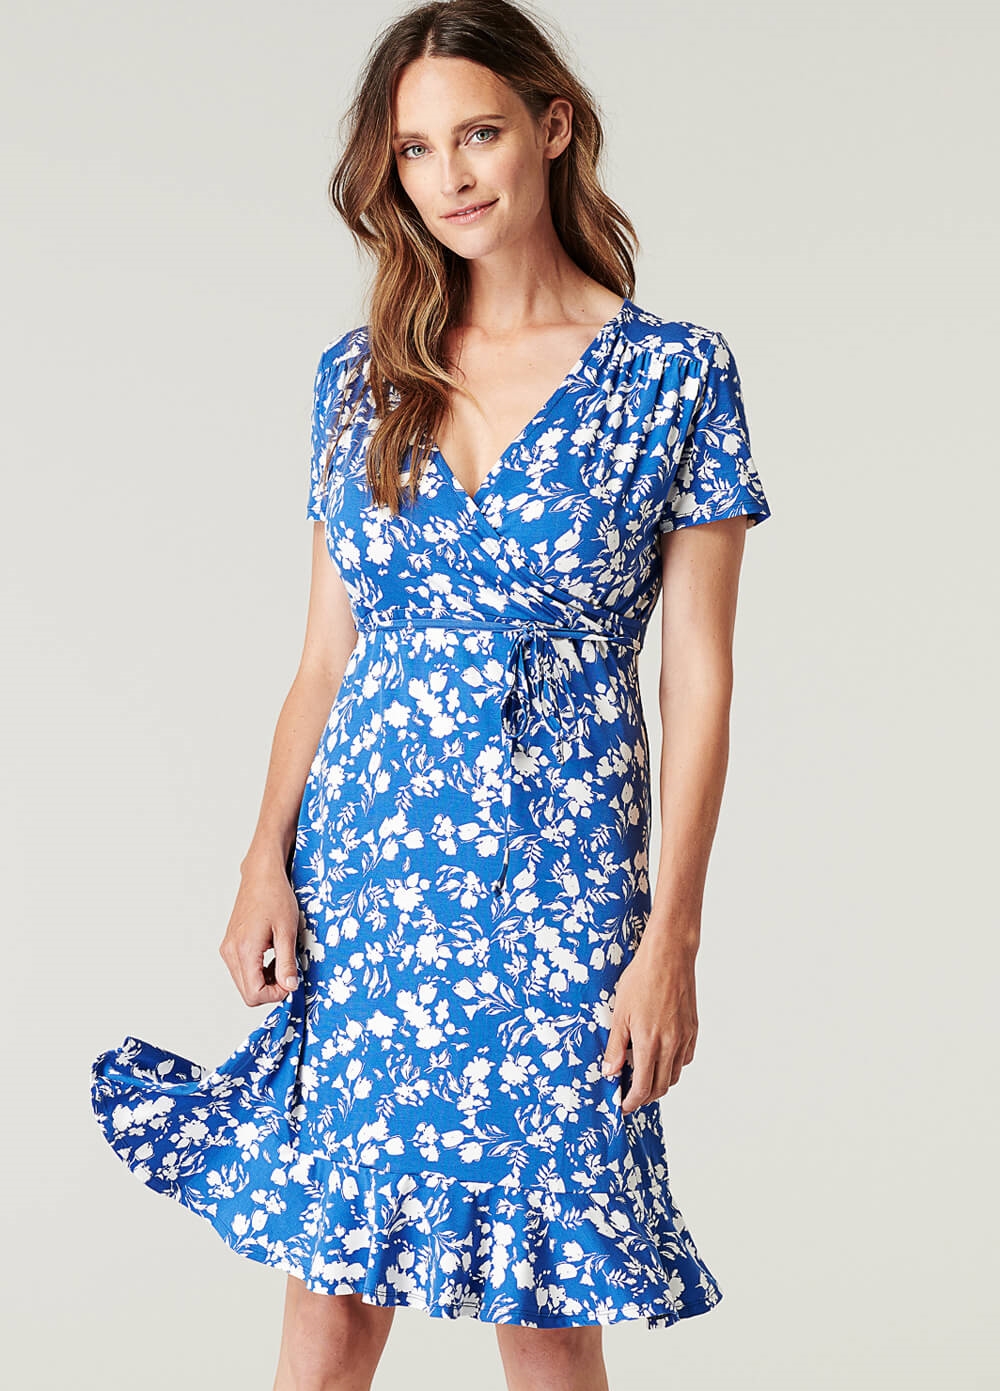 Noppies - Fruita Maternity Nursing Dress - Blue Floral | QueenBee